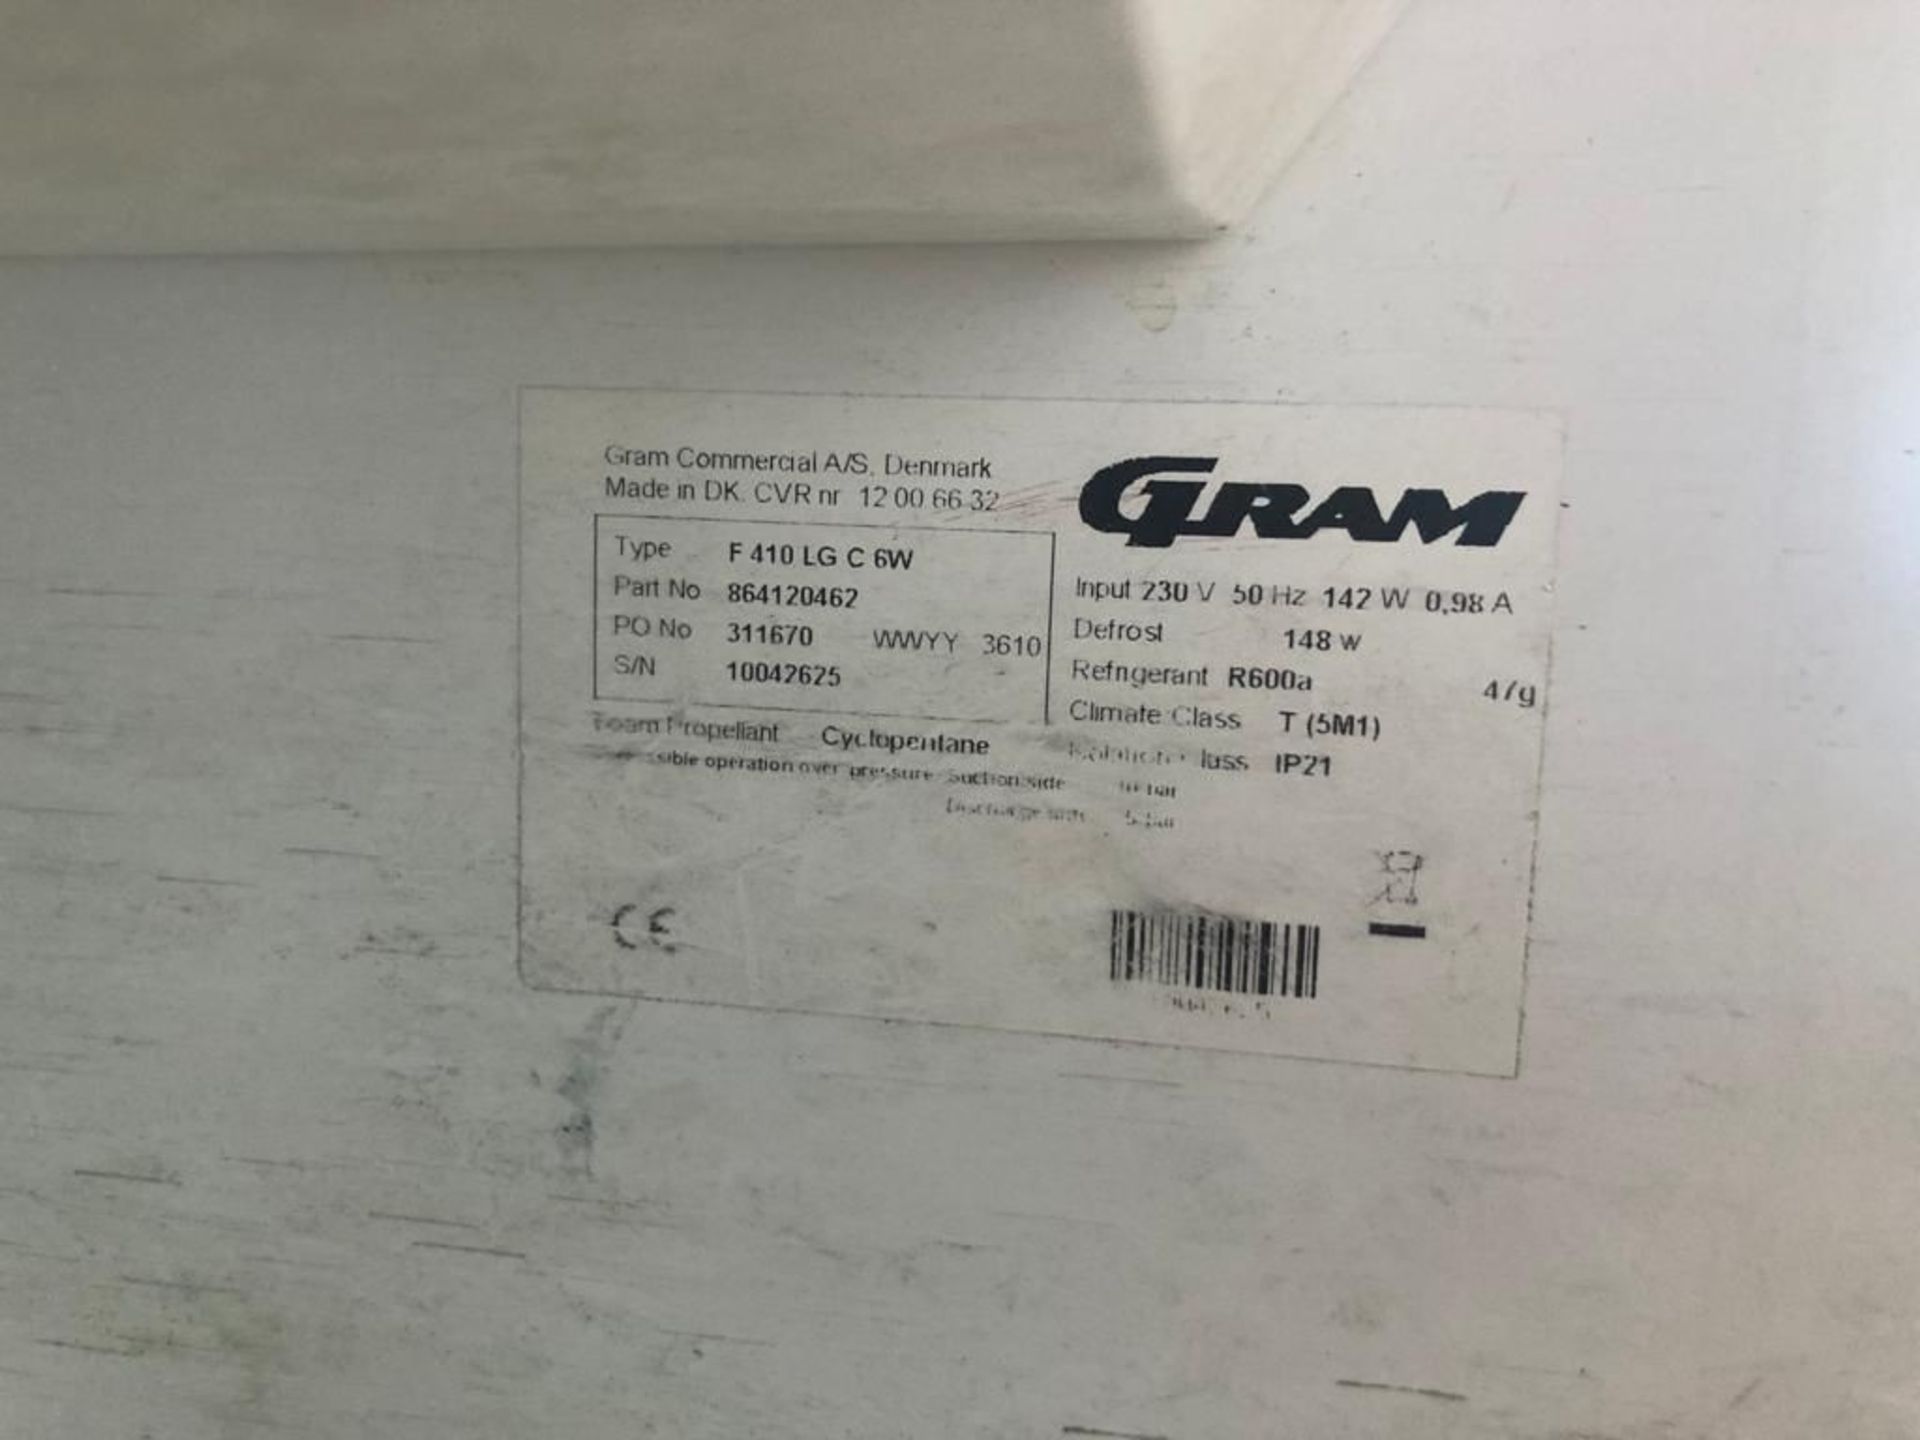 Gram Commercial Freezer - Image 3 of 3